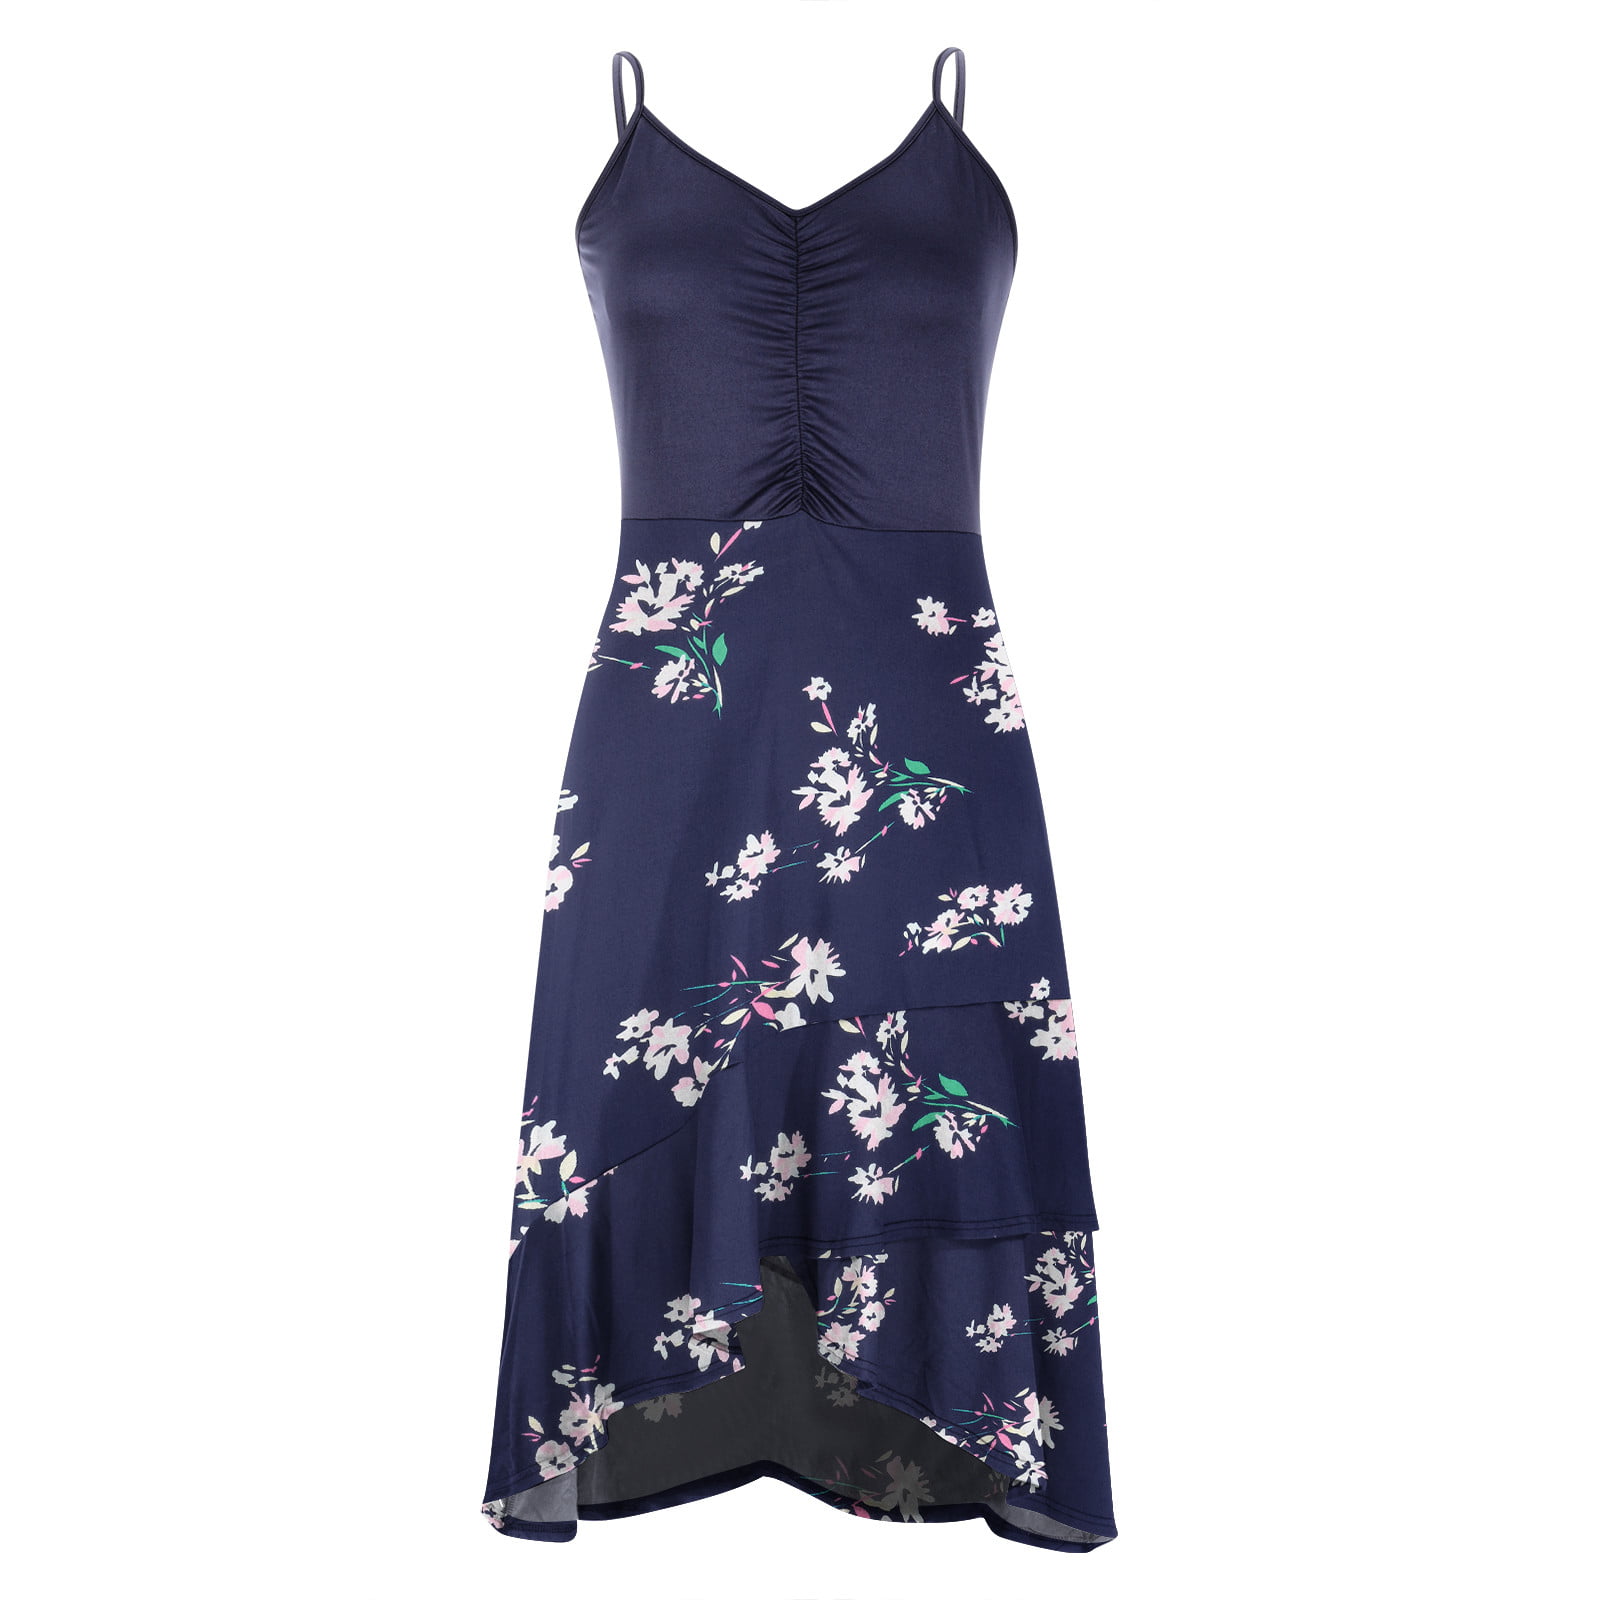 Digital ice cream Printed sleeveless Women pleated Dress S-4XL 1052 